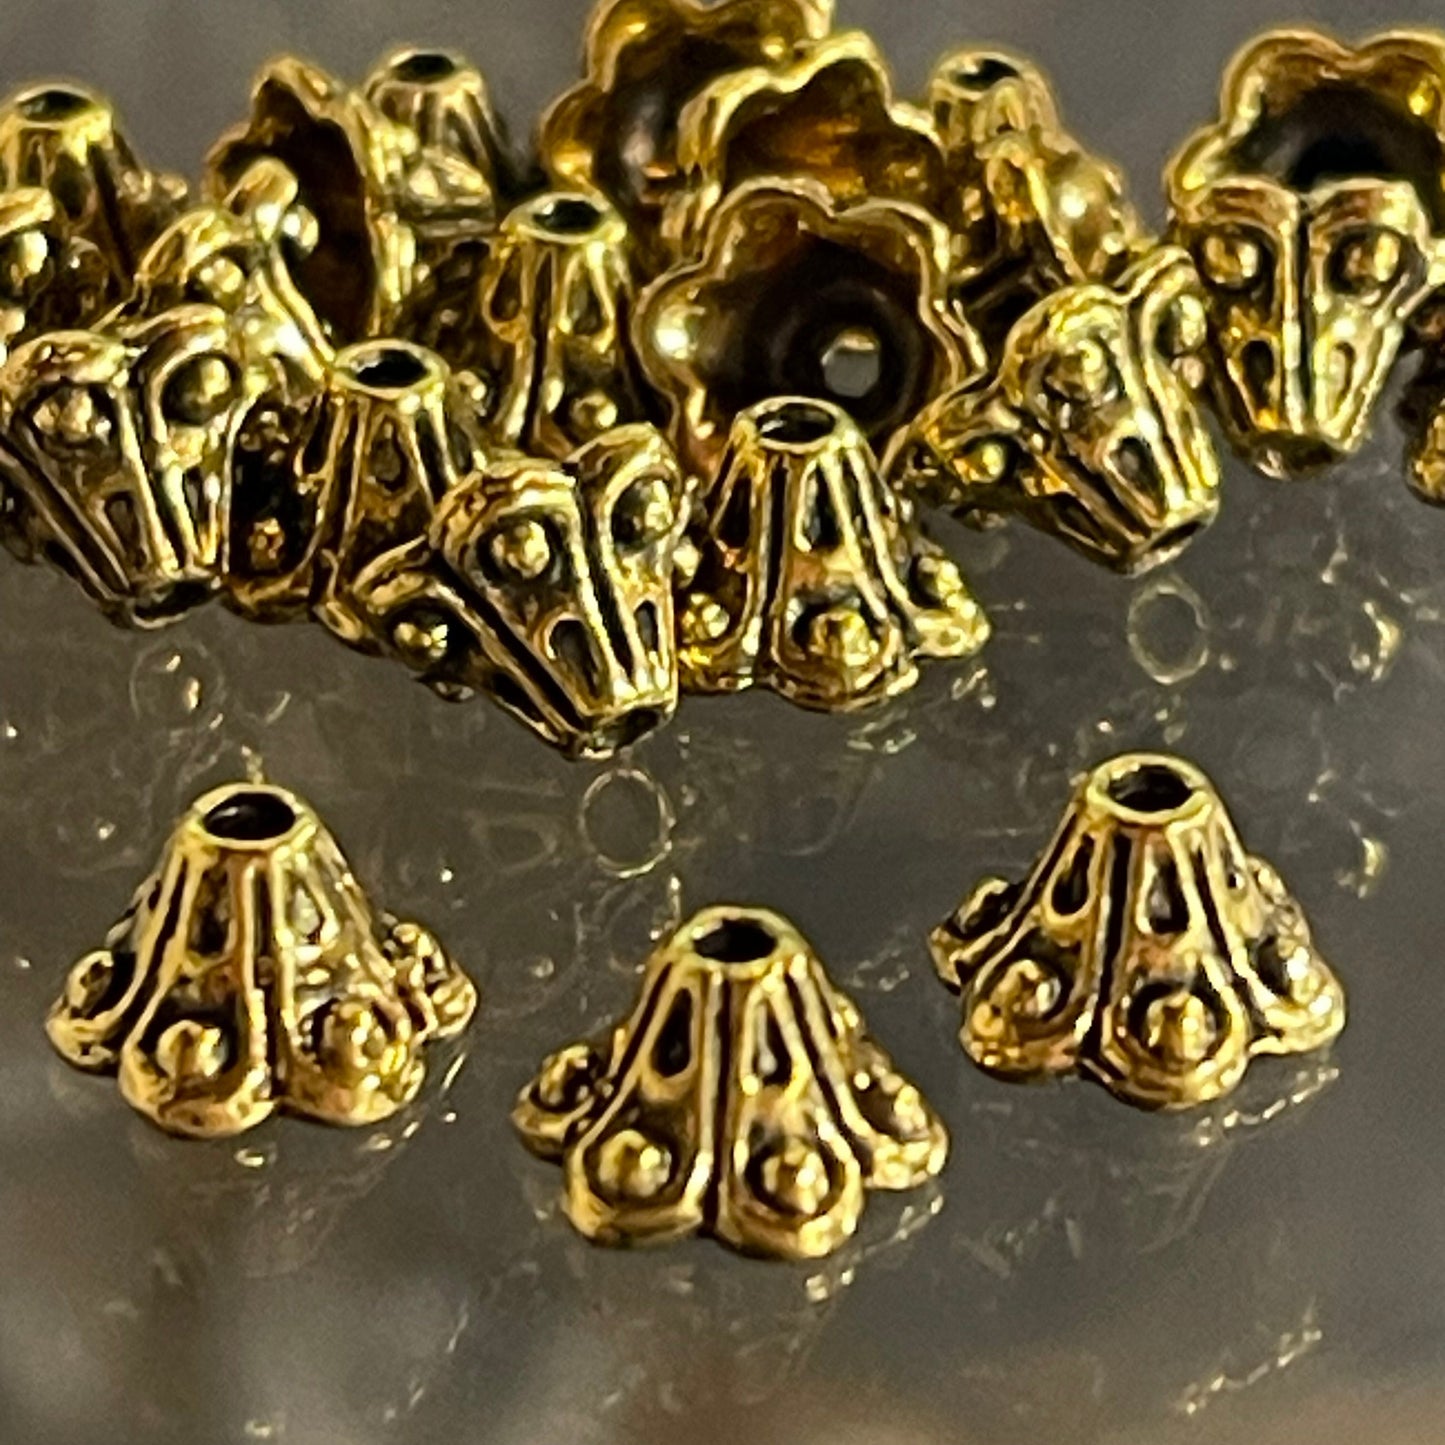 Gold flower Bead Caps, 20 per order.